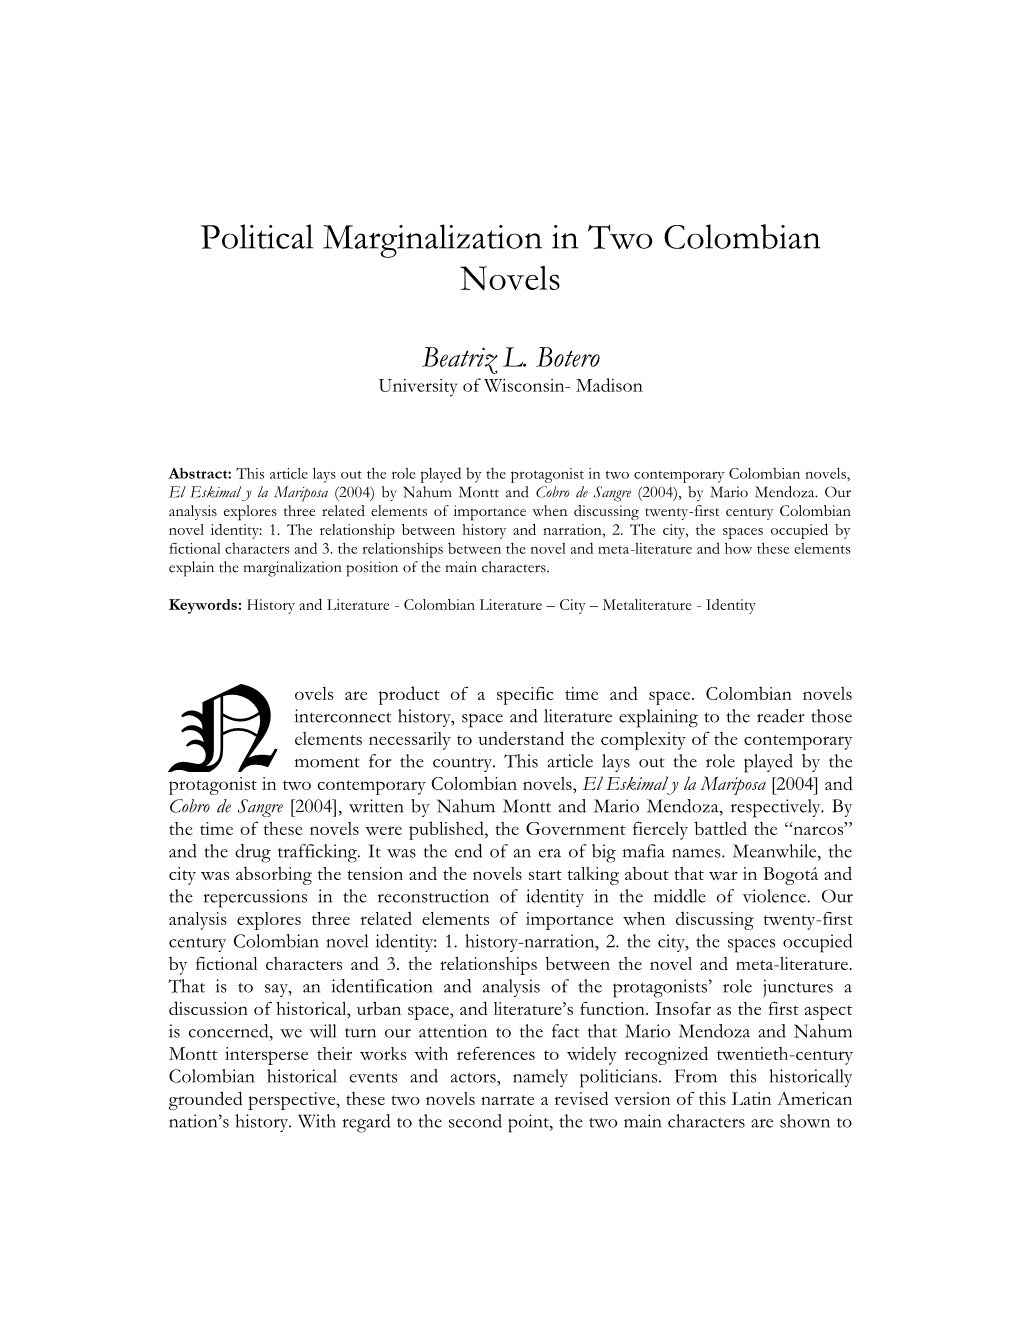 Political Marginalization in Two Colombian Novels